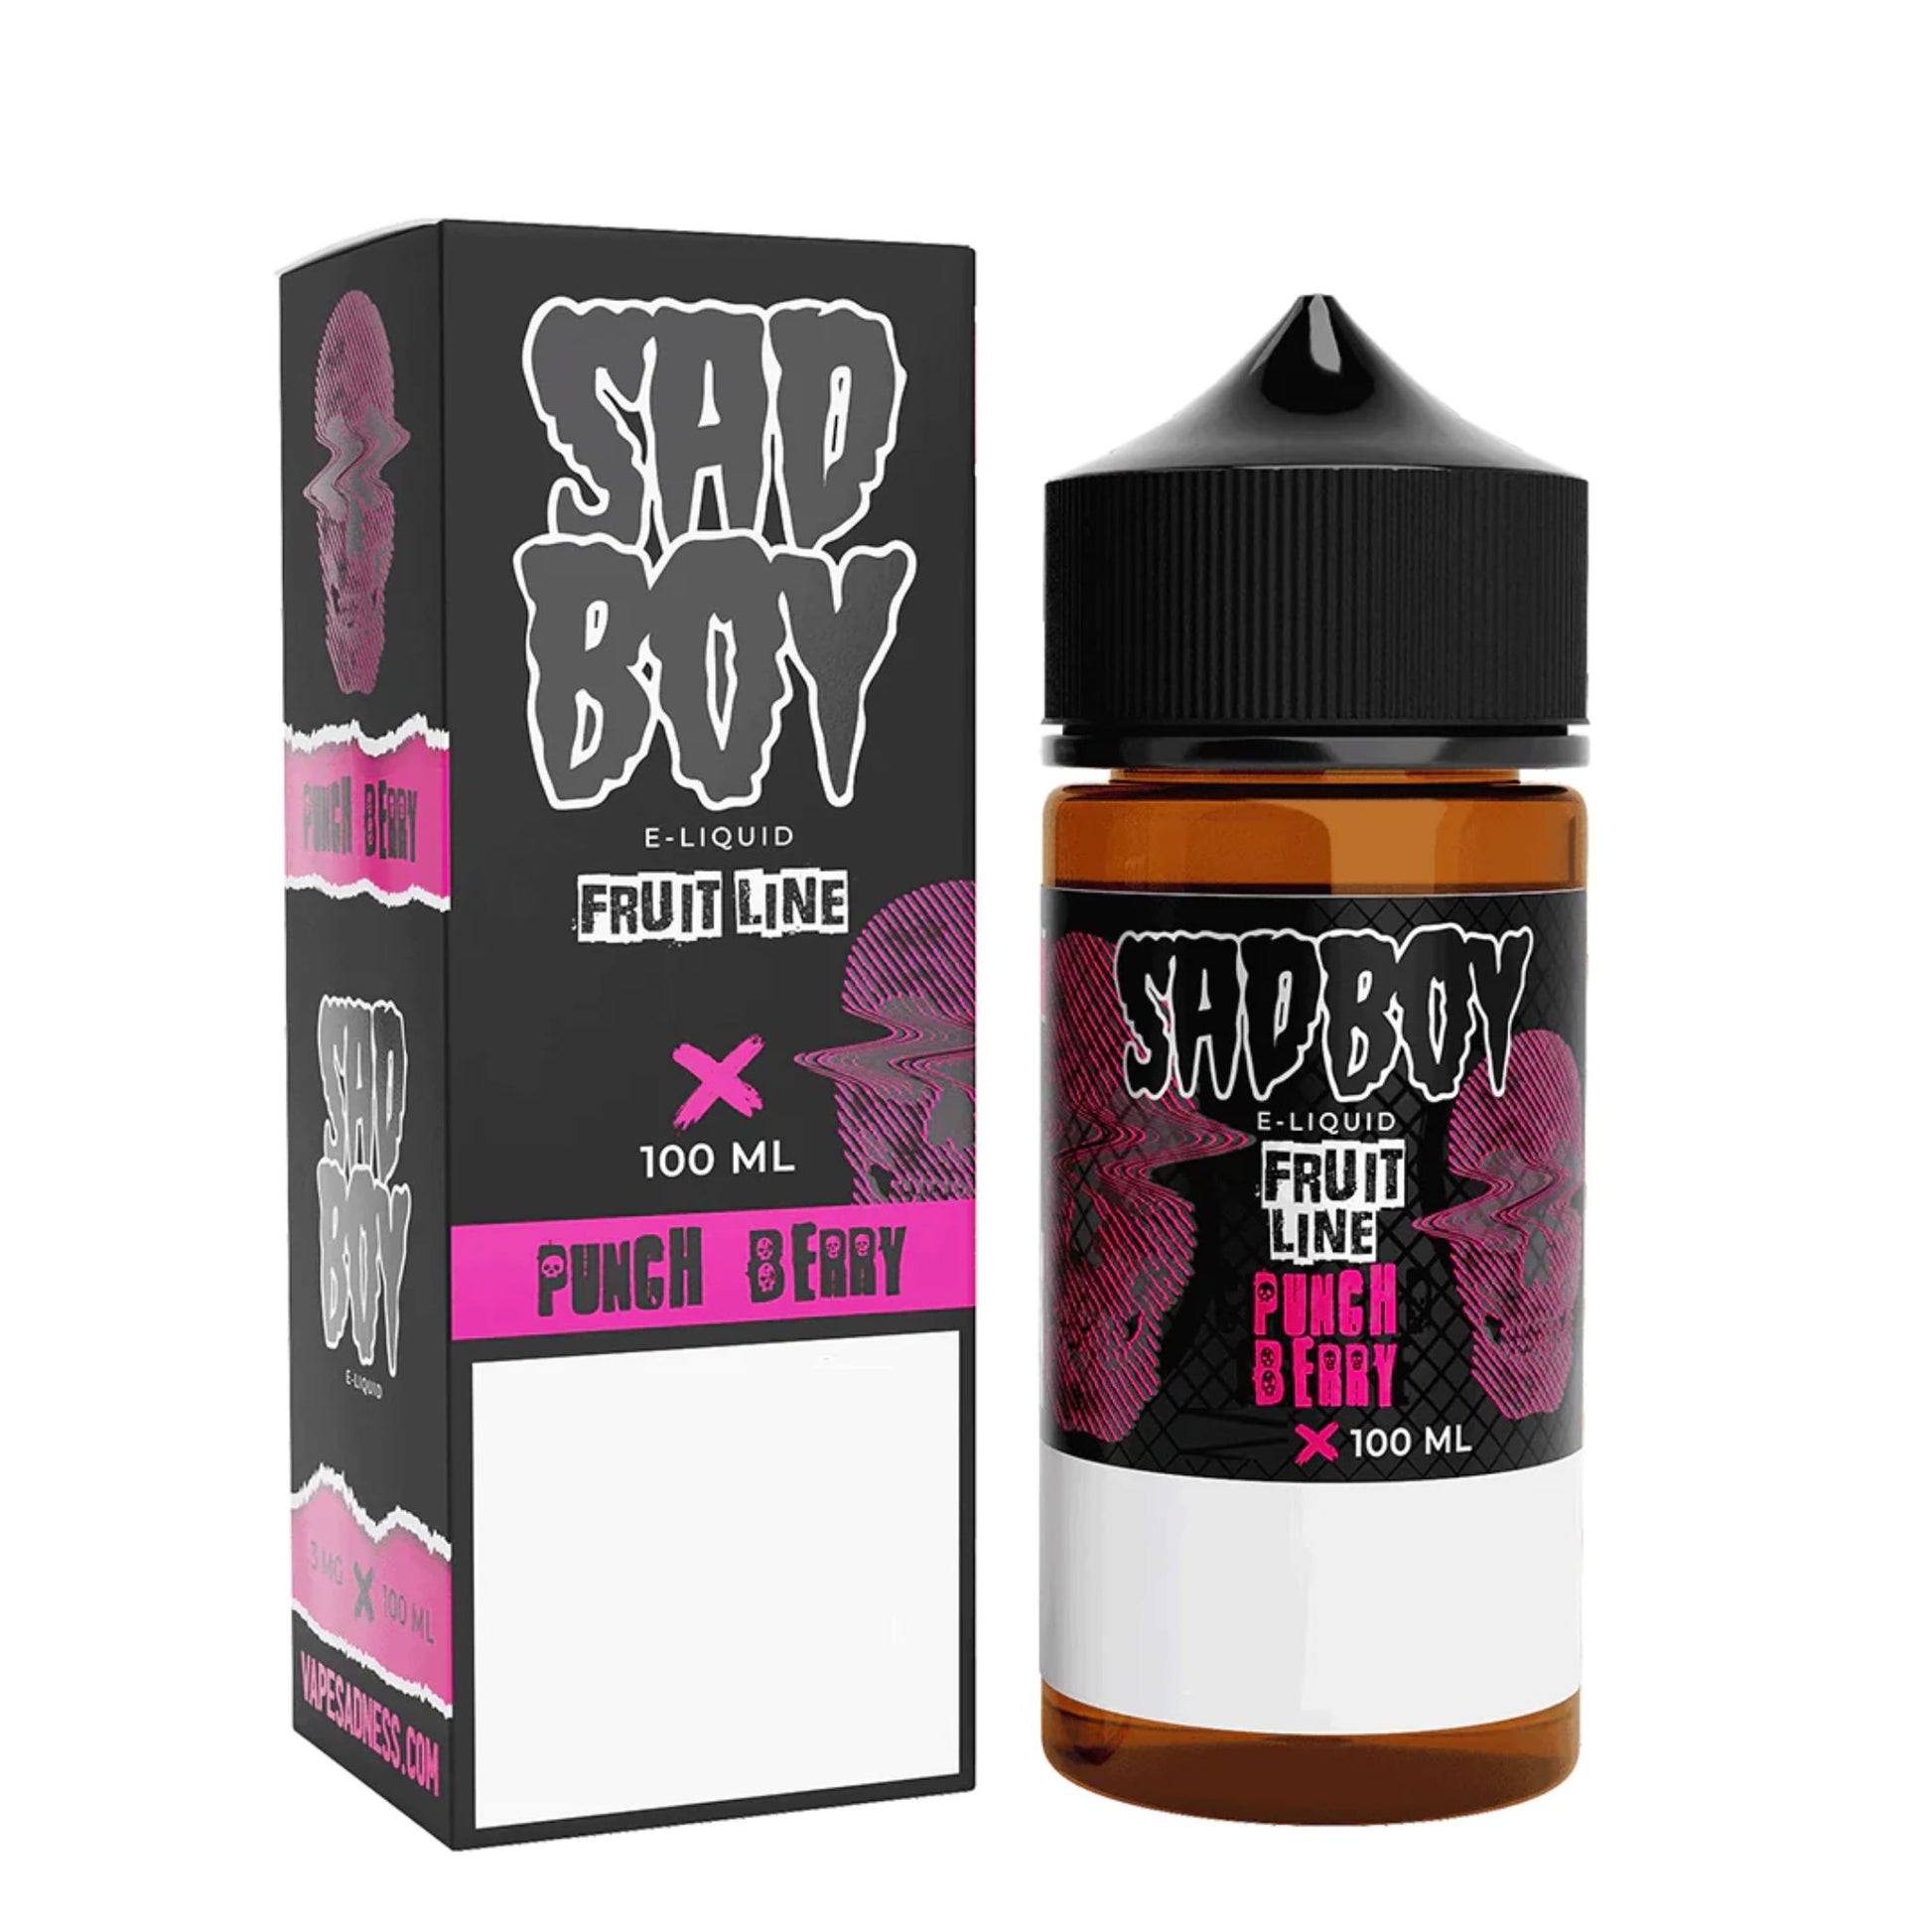 Sadboy | Punch Berry | 100ml bottle and box